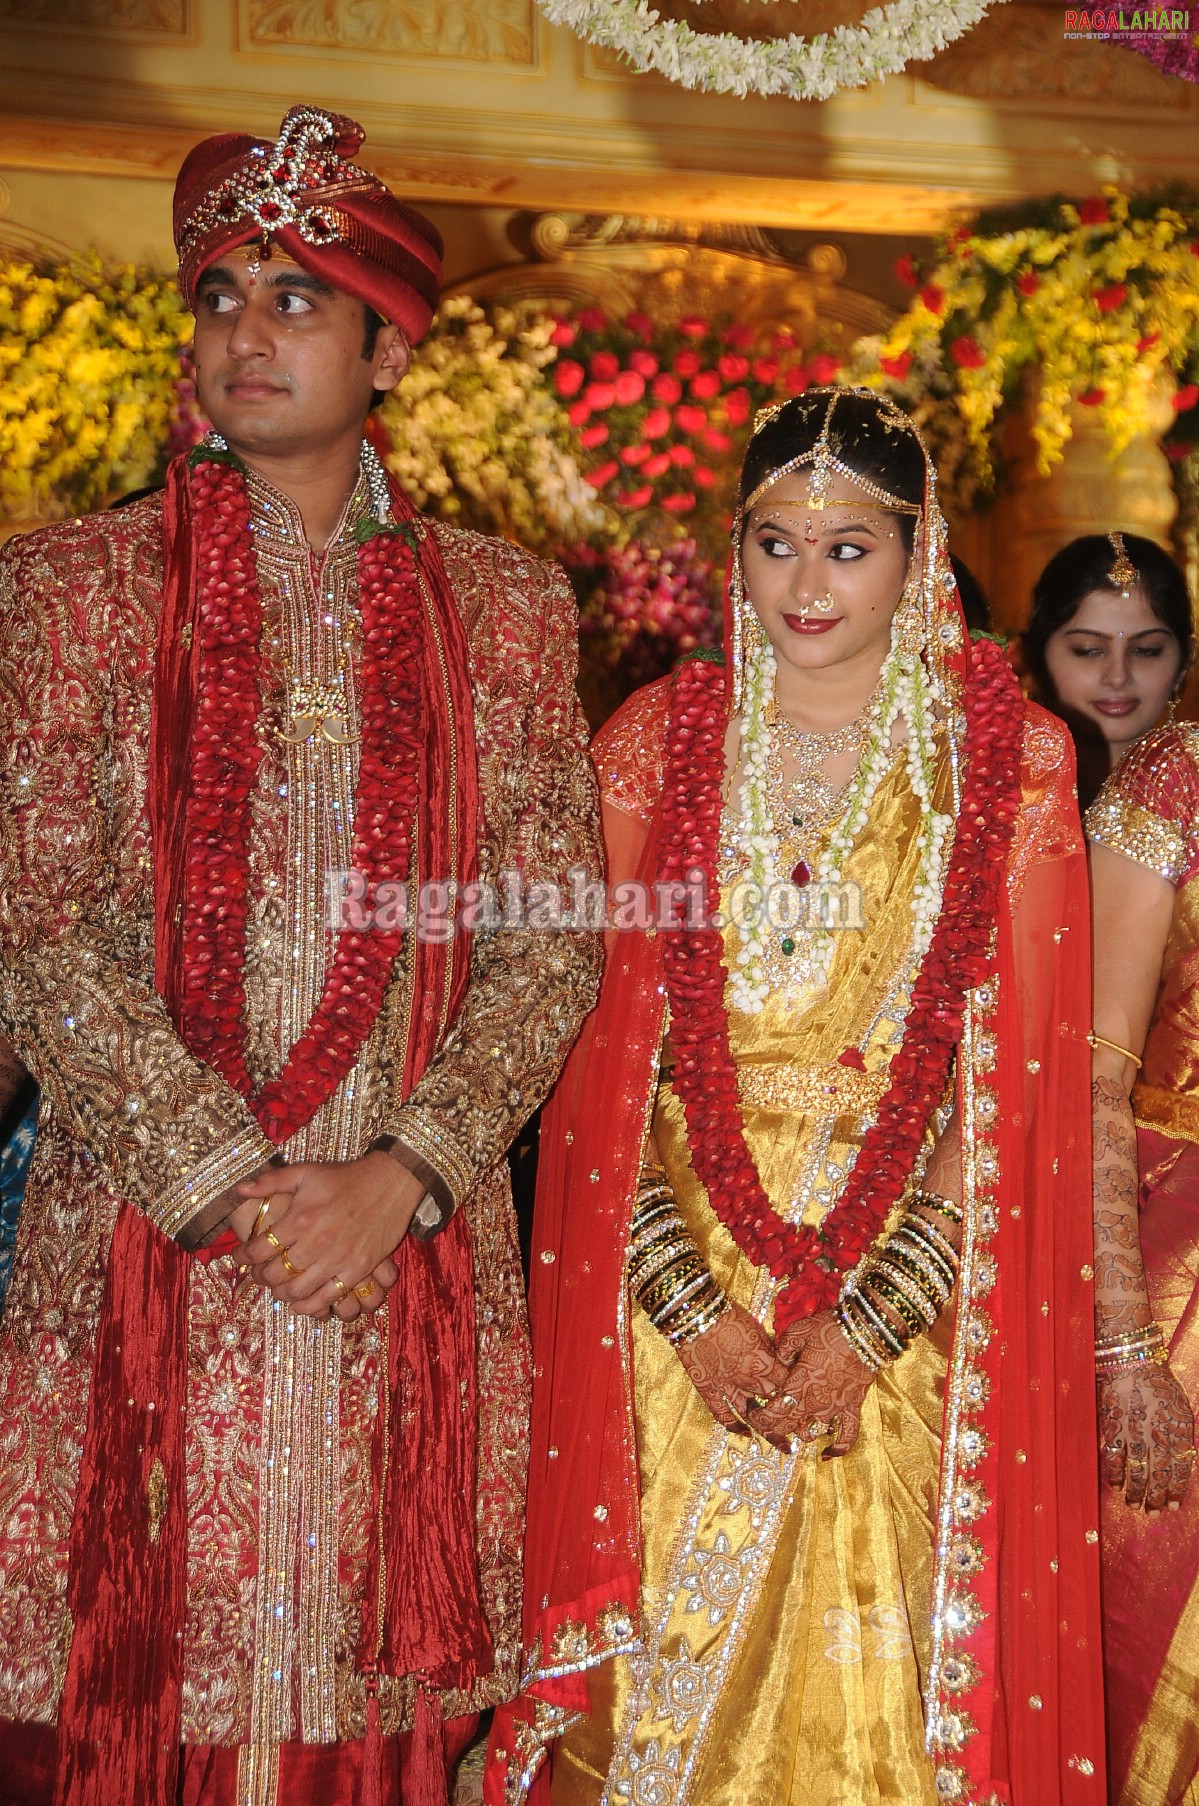 Mukesh Goud's Daughter Shilpa's Marriage